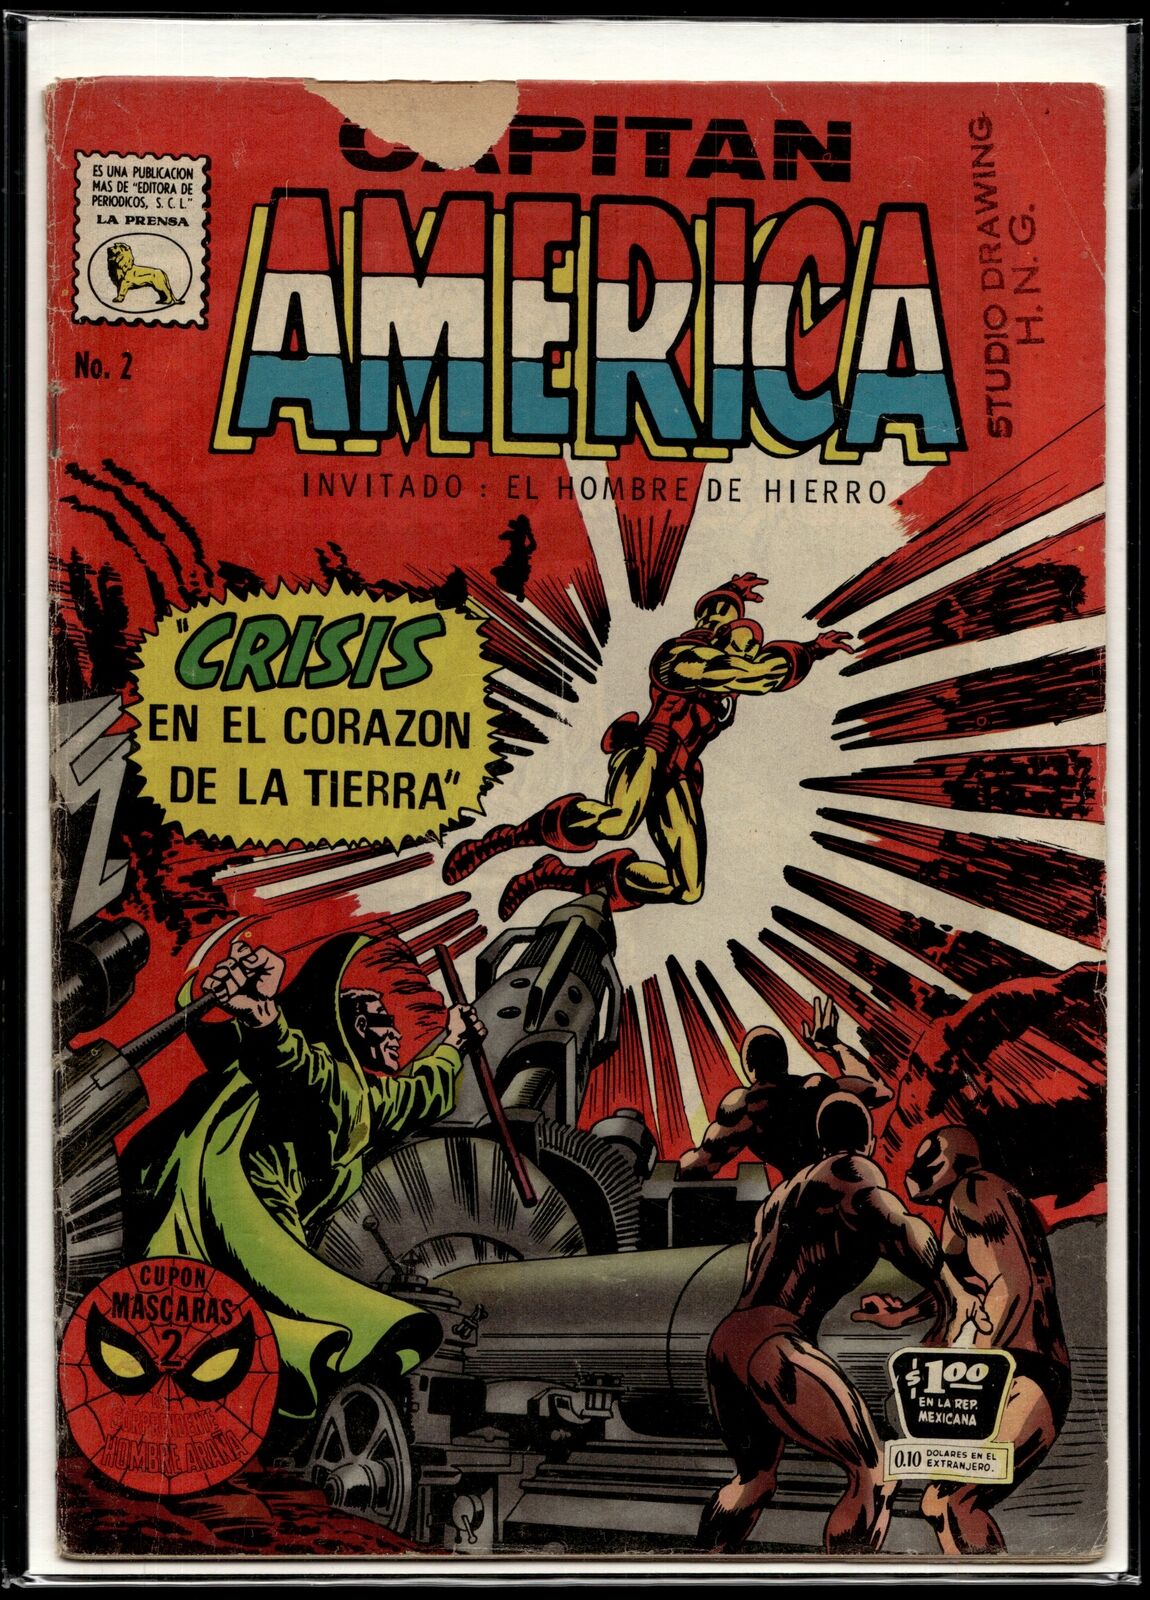 1968 Capitan America #2 Editora de Periodicos Comic